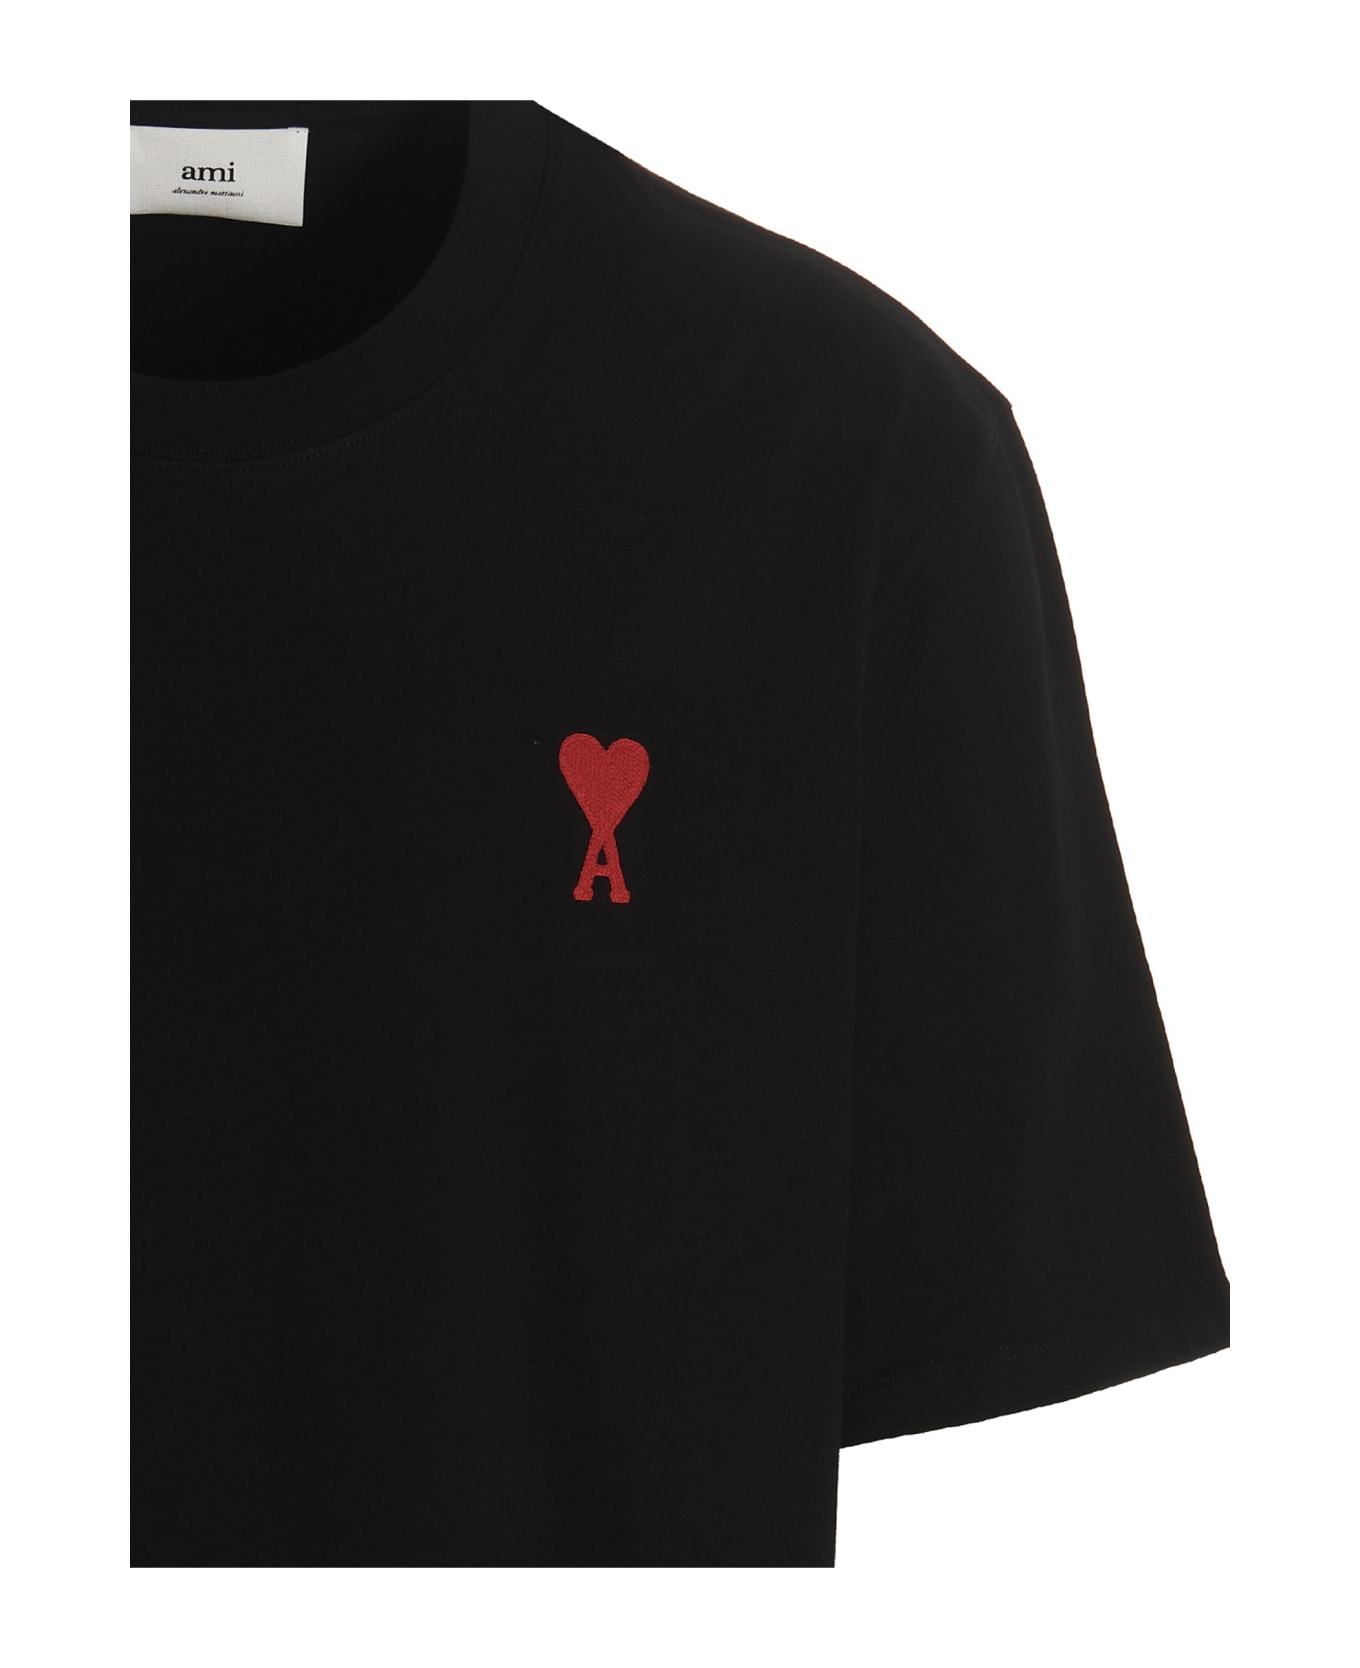 Ami Alexandre Mattiussi 'adc' T-shirt - Black/red